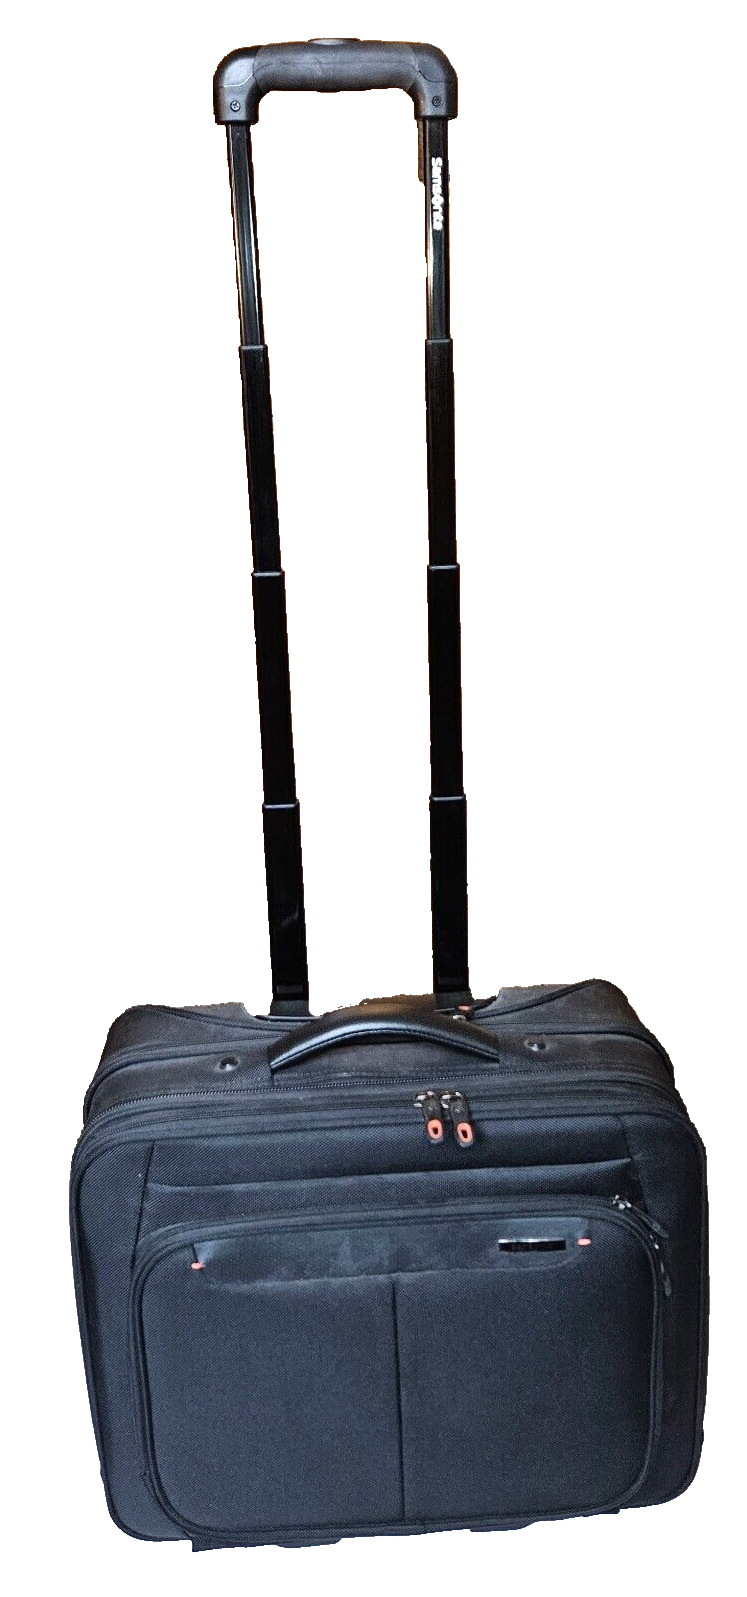 Samsonite Black Rolling Business Briefcase Carry On Laptop Travel Bag w/ wheels